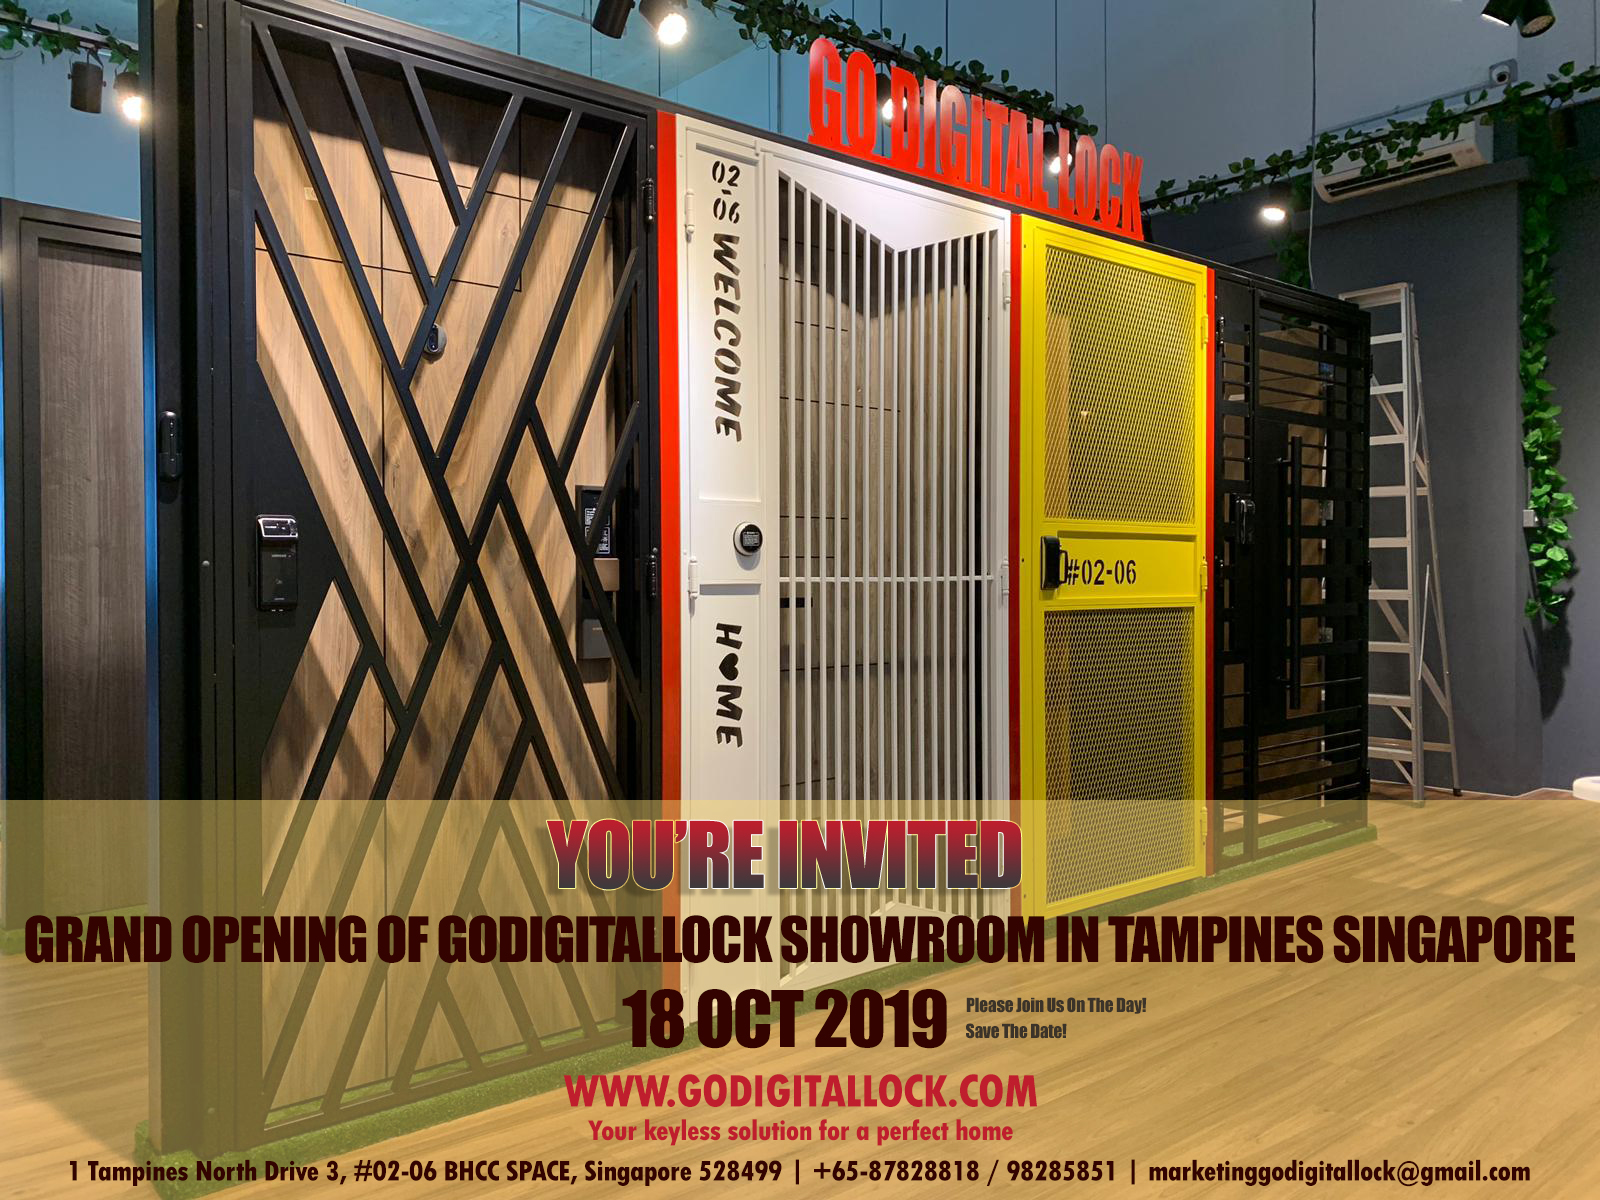 Grand Opening Promotion of Godigitallock Brand New Showroom, Tampines, South East, Singapore